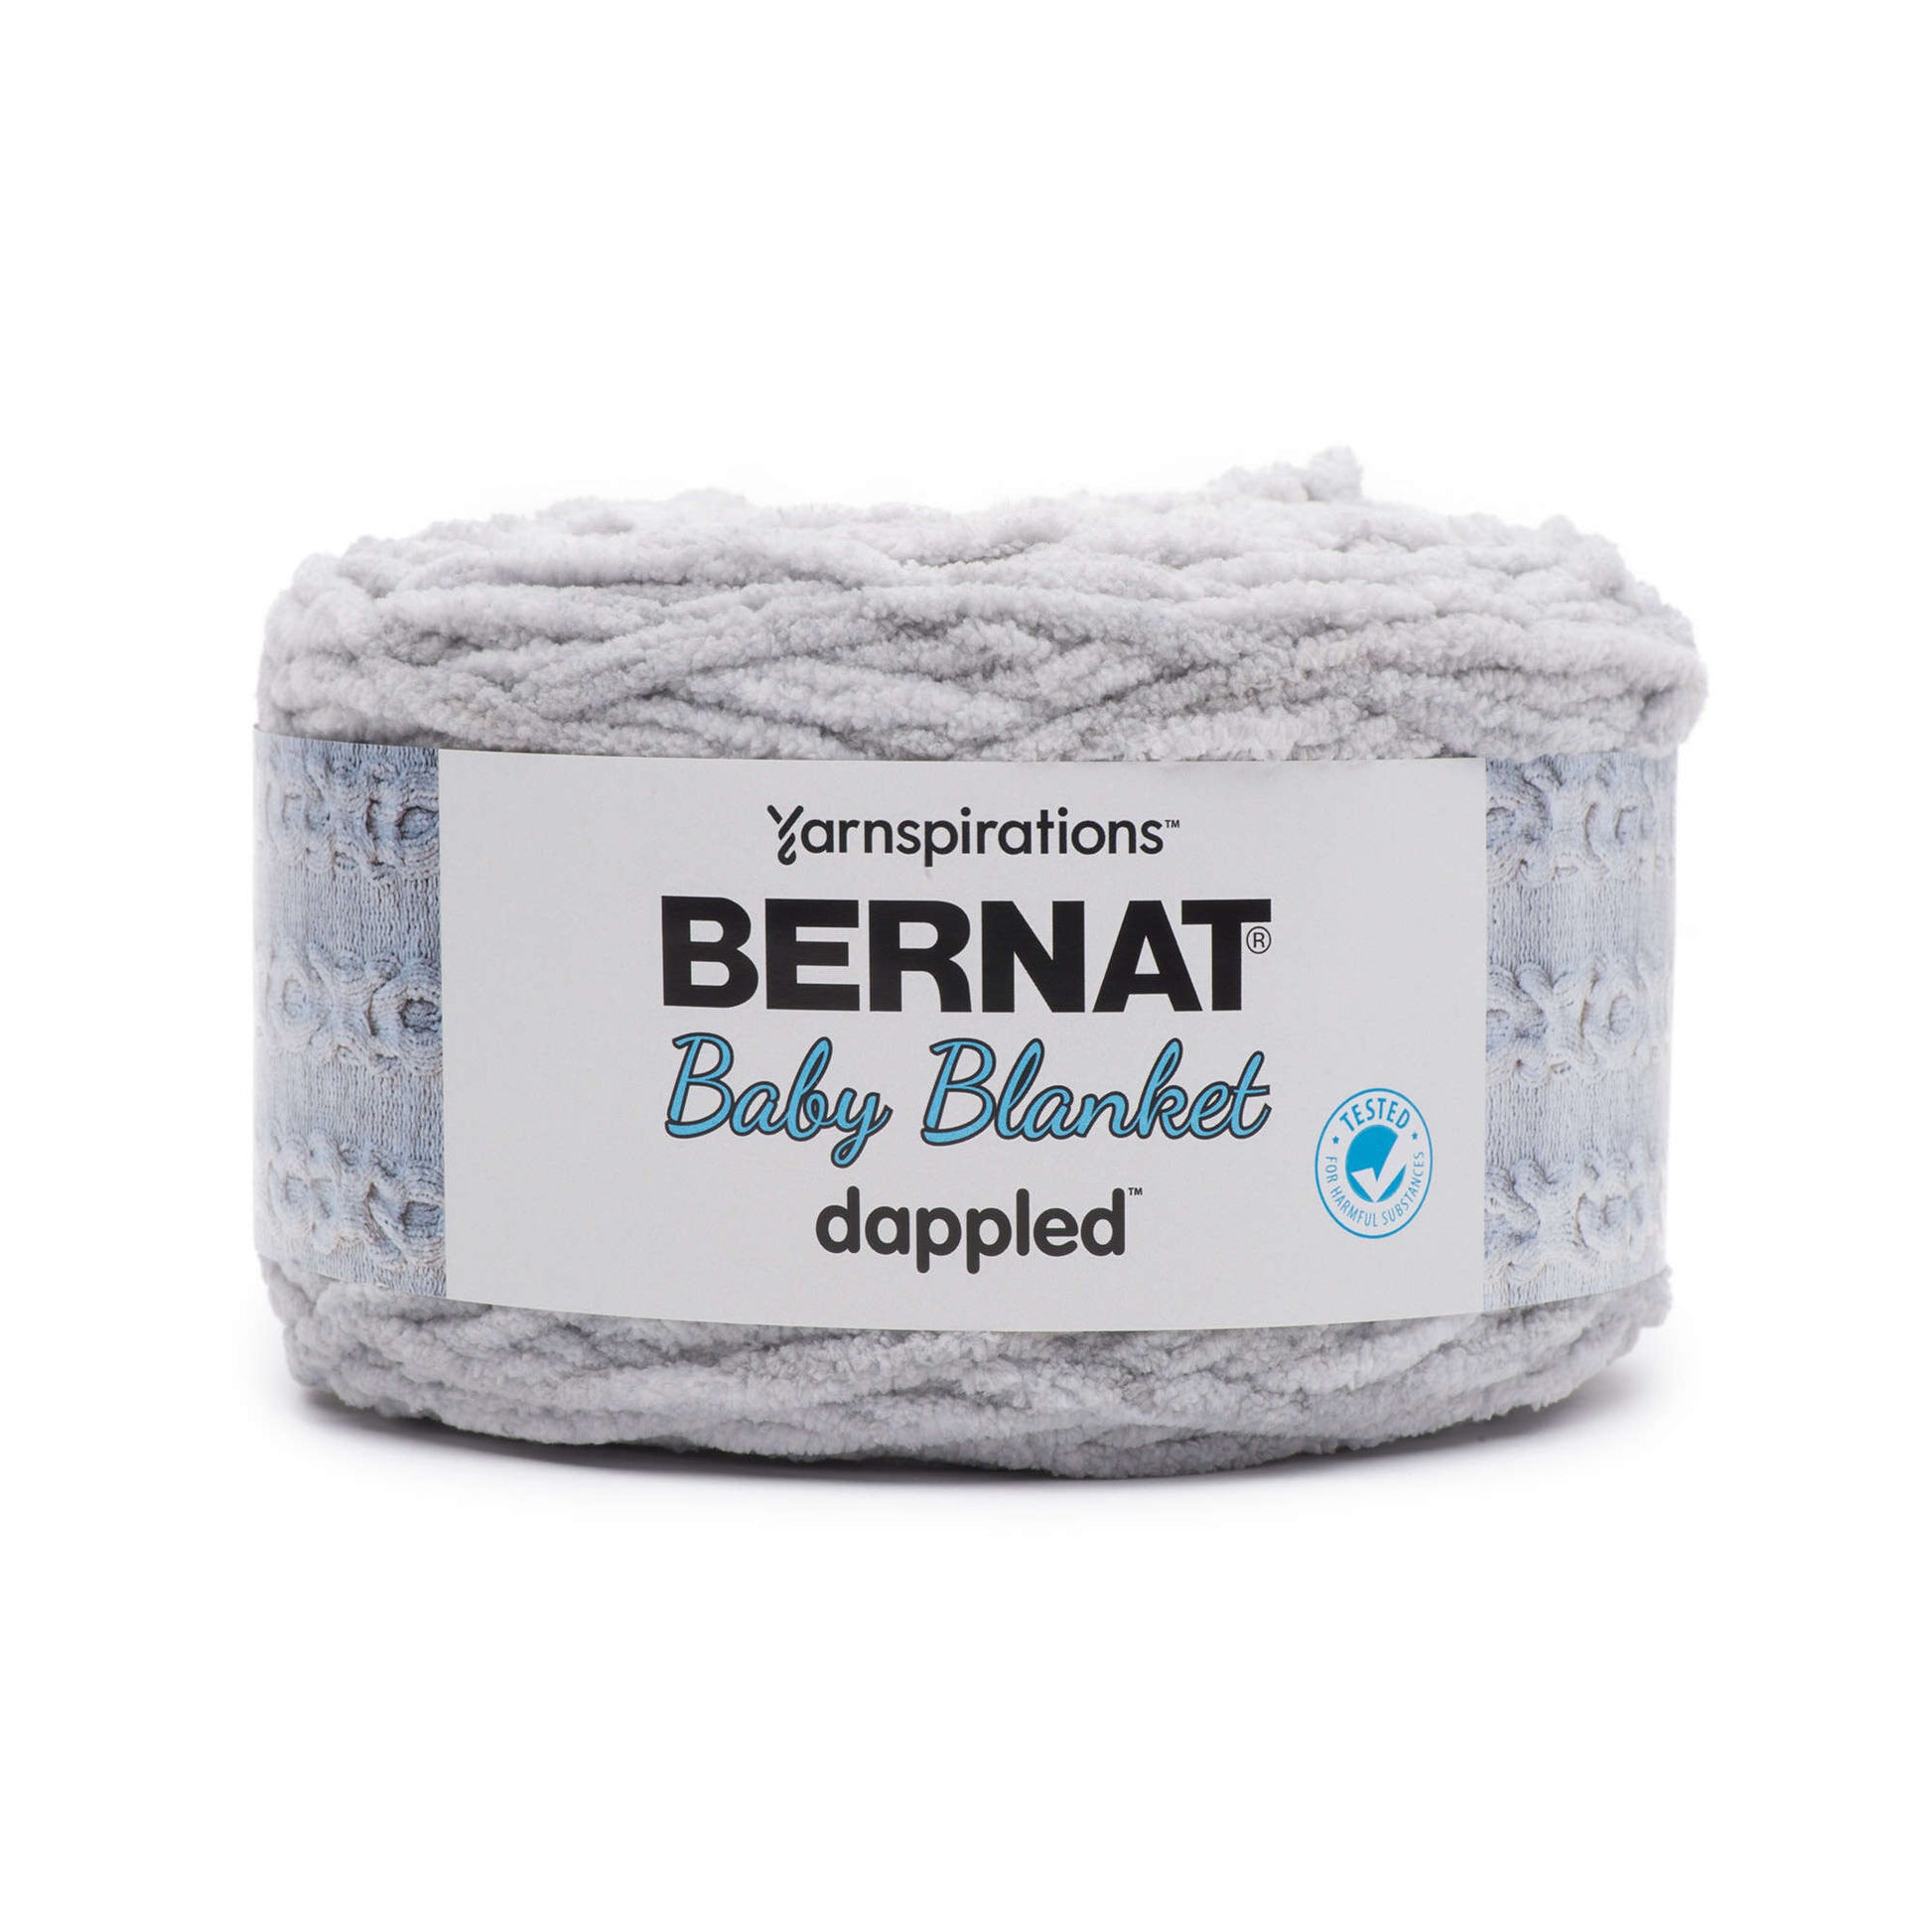 Bernat Baby Blanket Big Ball Yarn - Lovely Blue